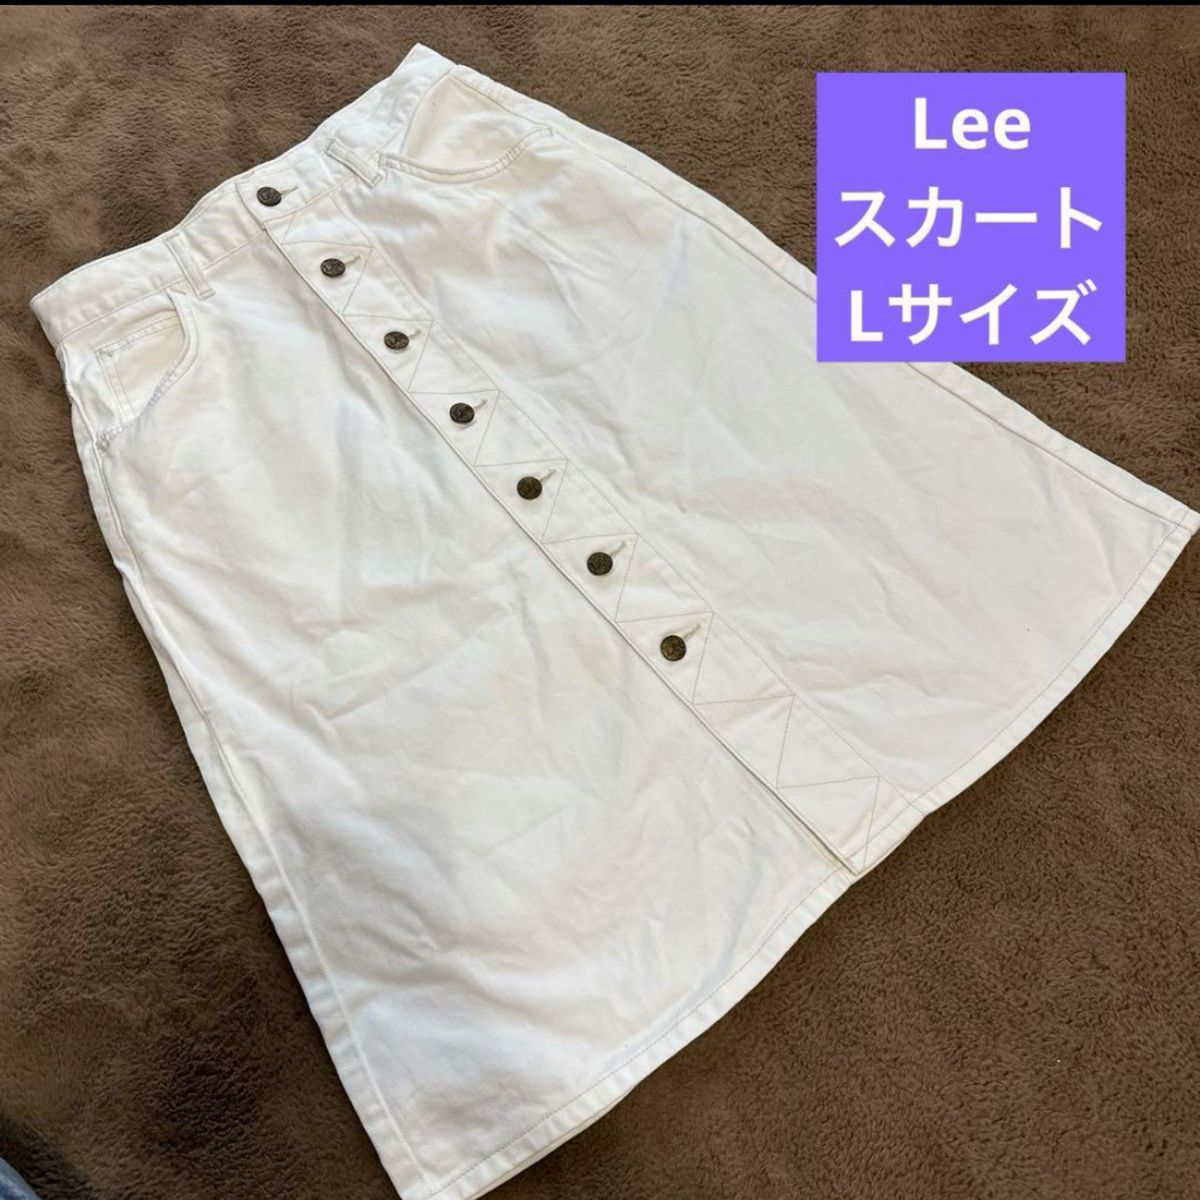 Lee スカート Lサイズ ホワイト